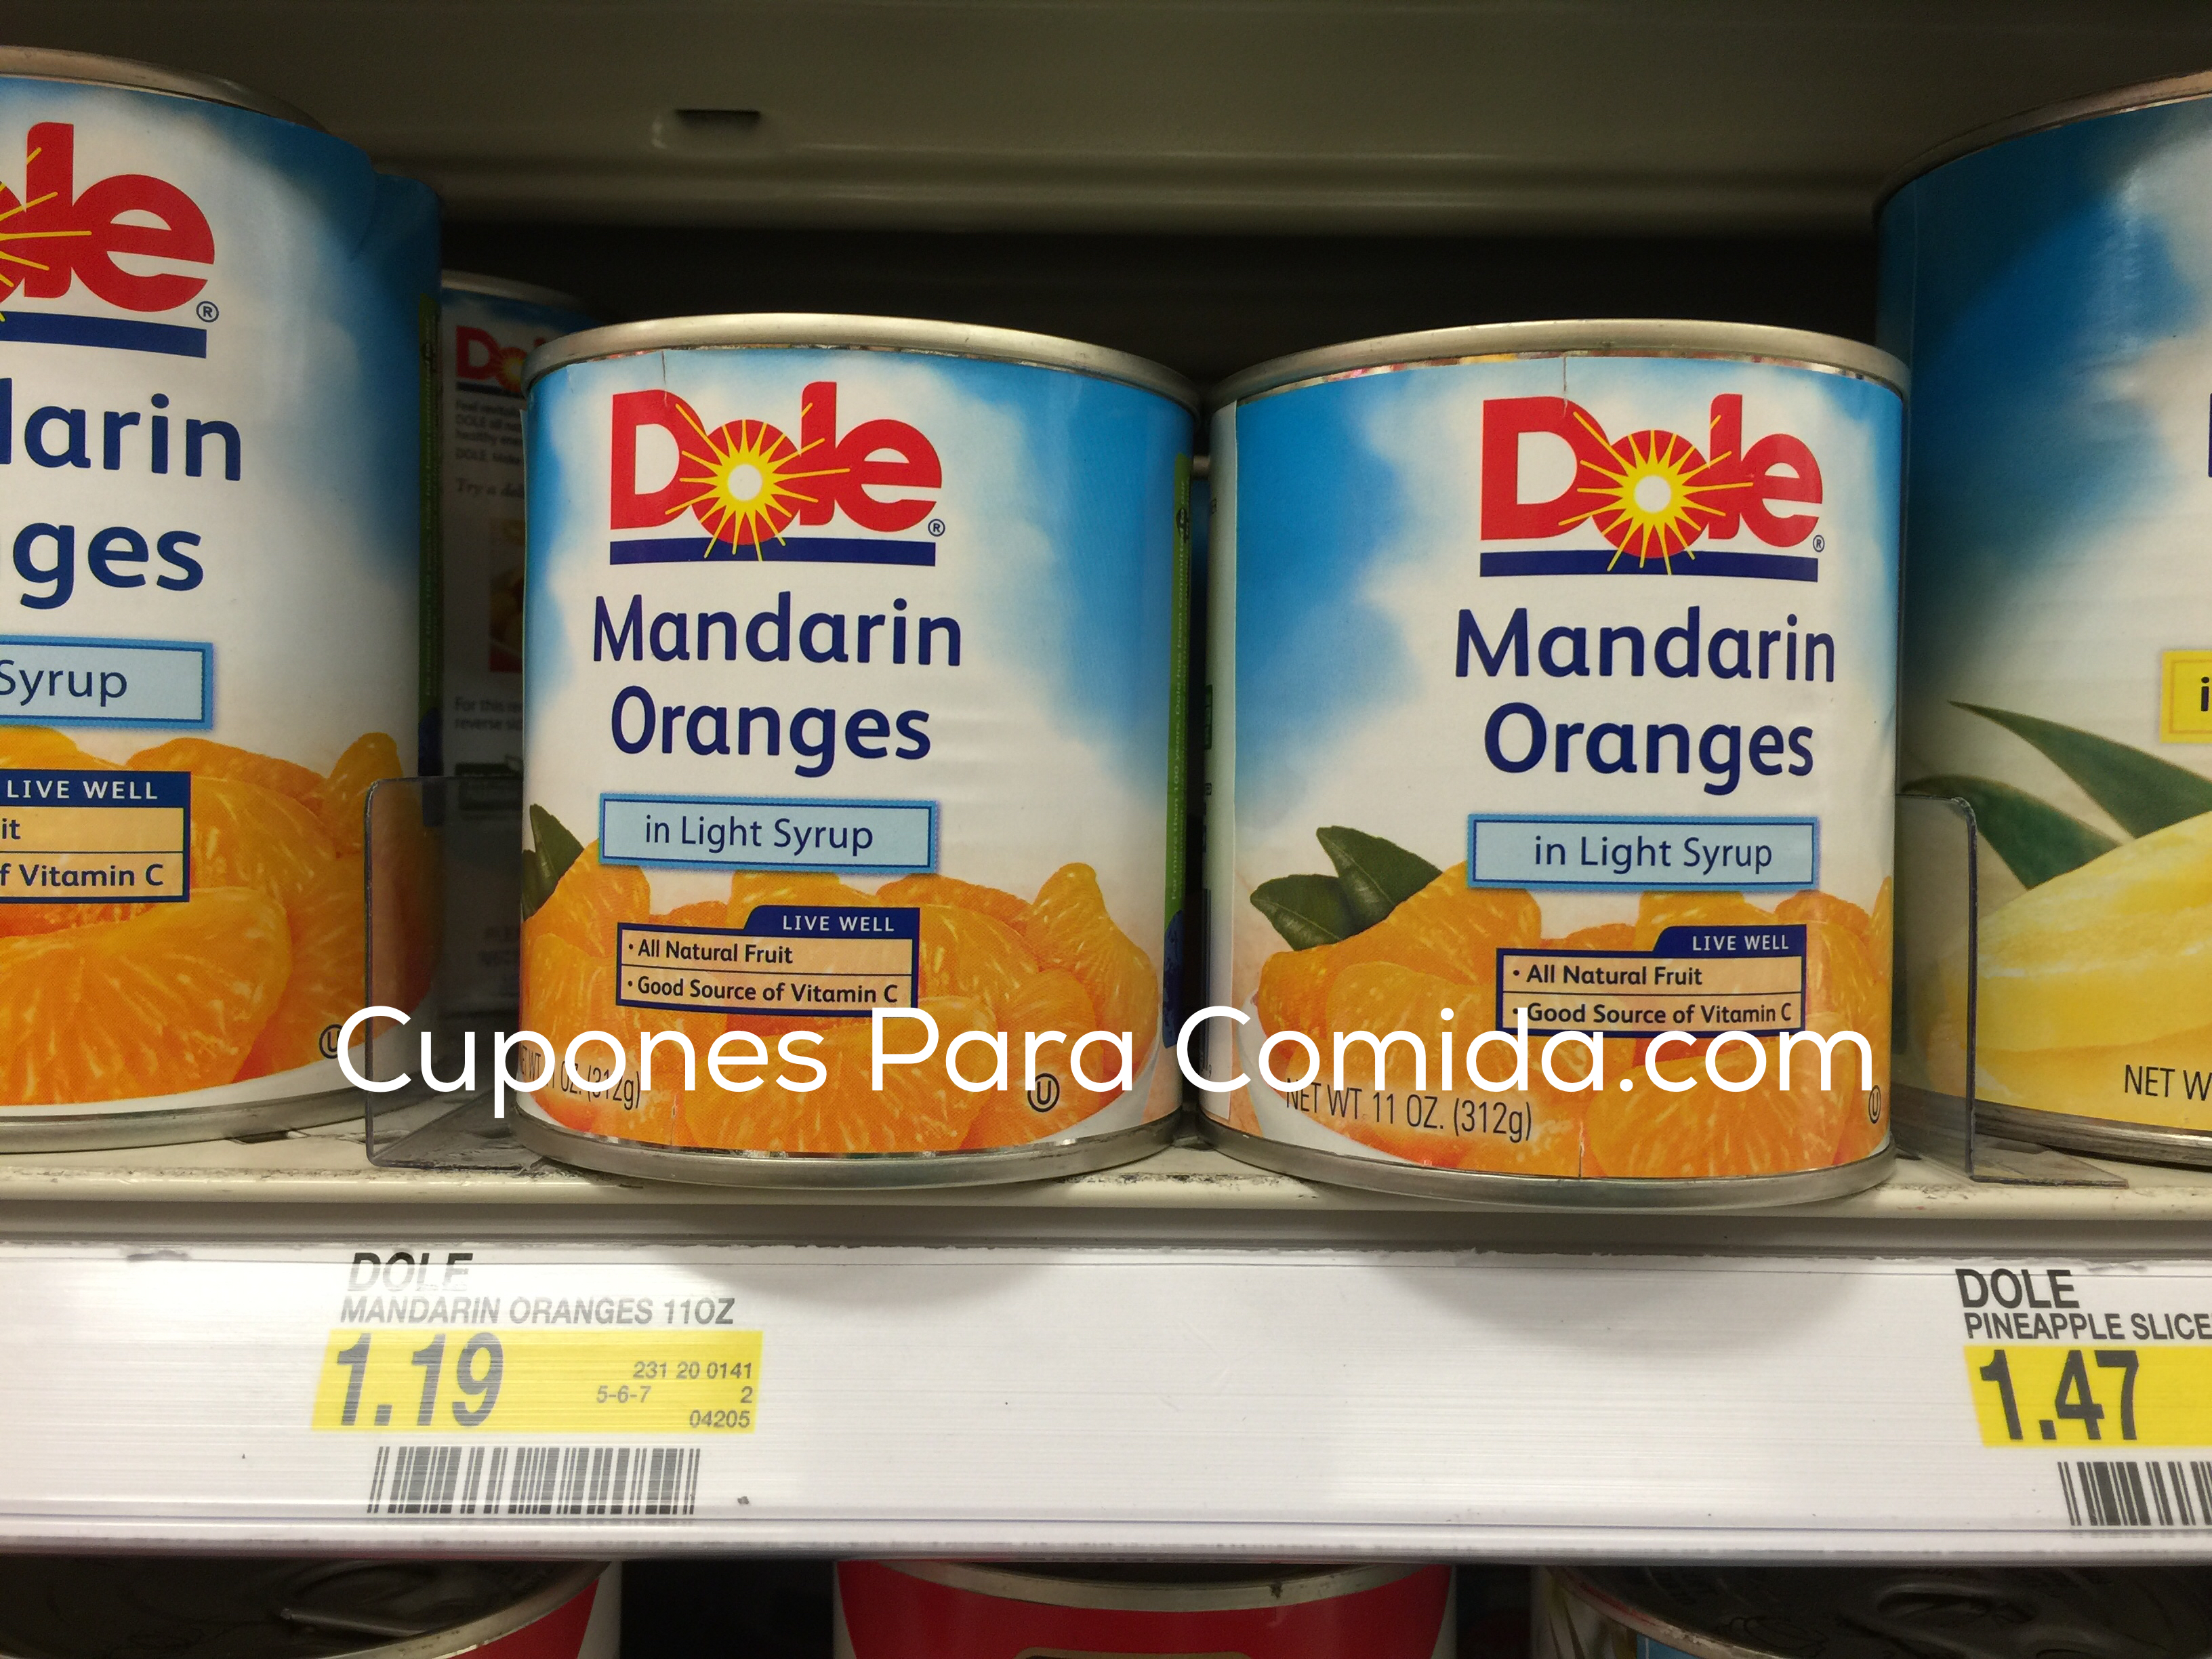  Dole Mandarin Oranges 11/01/15